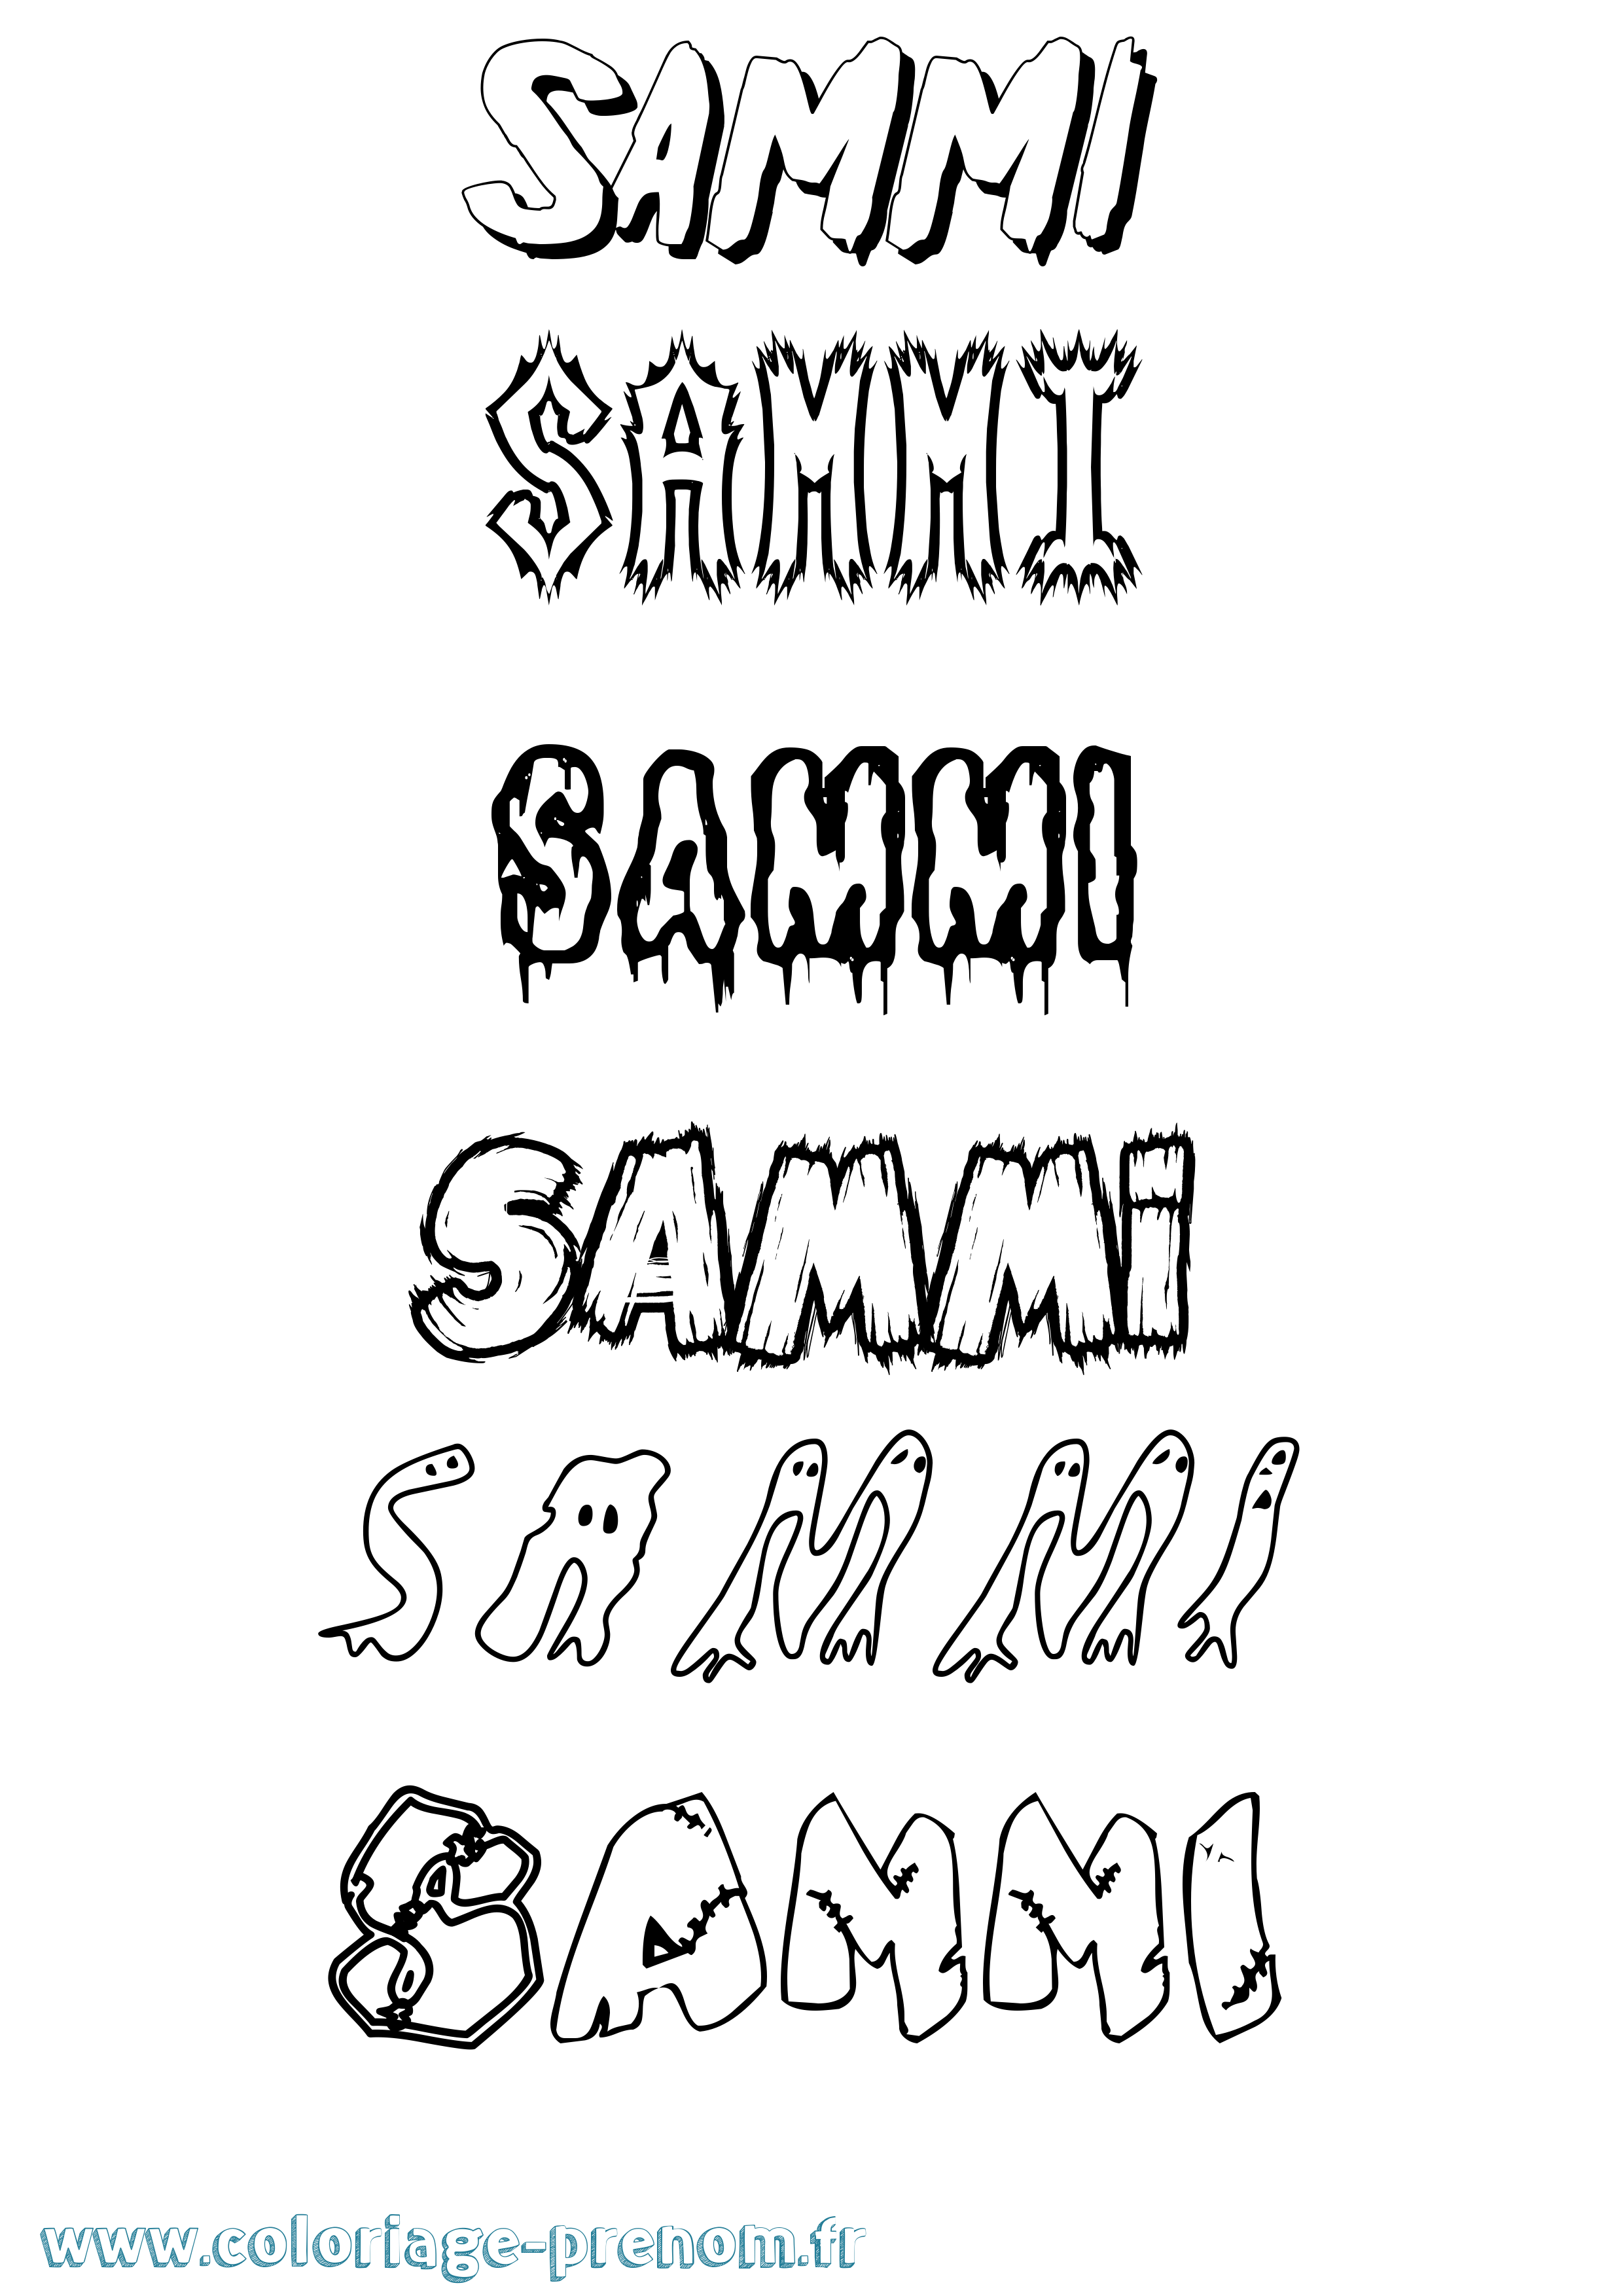 Coloriage prénom Sammi Frisson